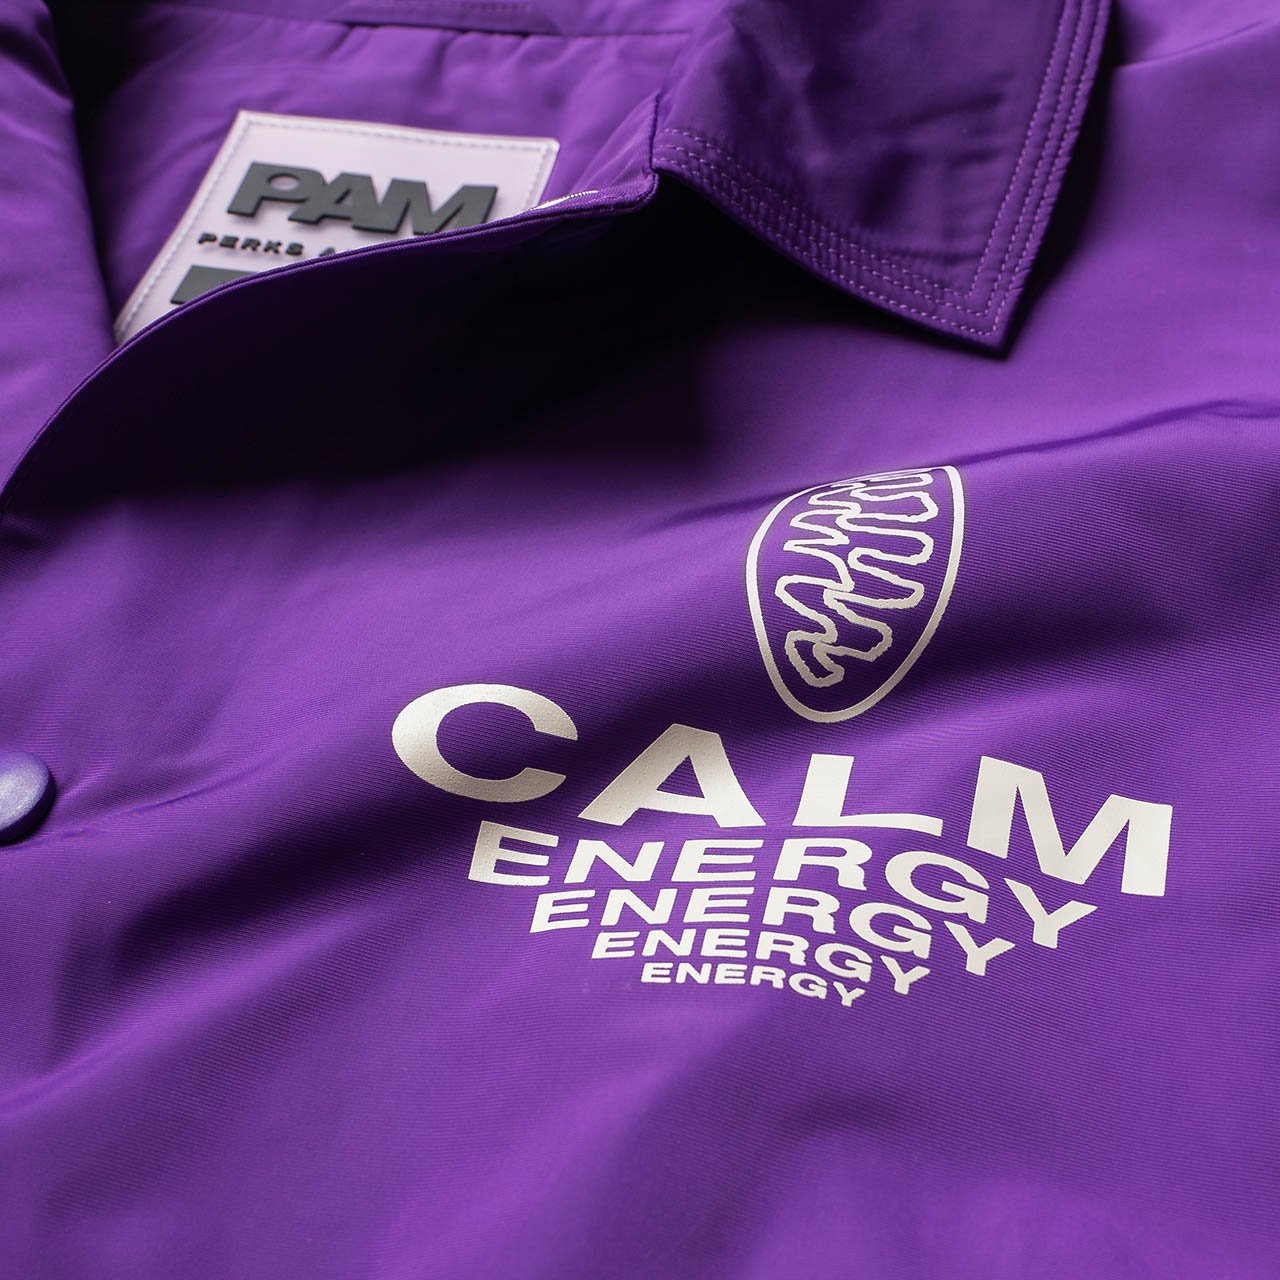 perks and mini waveform calm coach jacket (purple) - 39080-c-mprp - a.plus - Image - 4